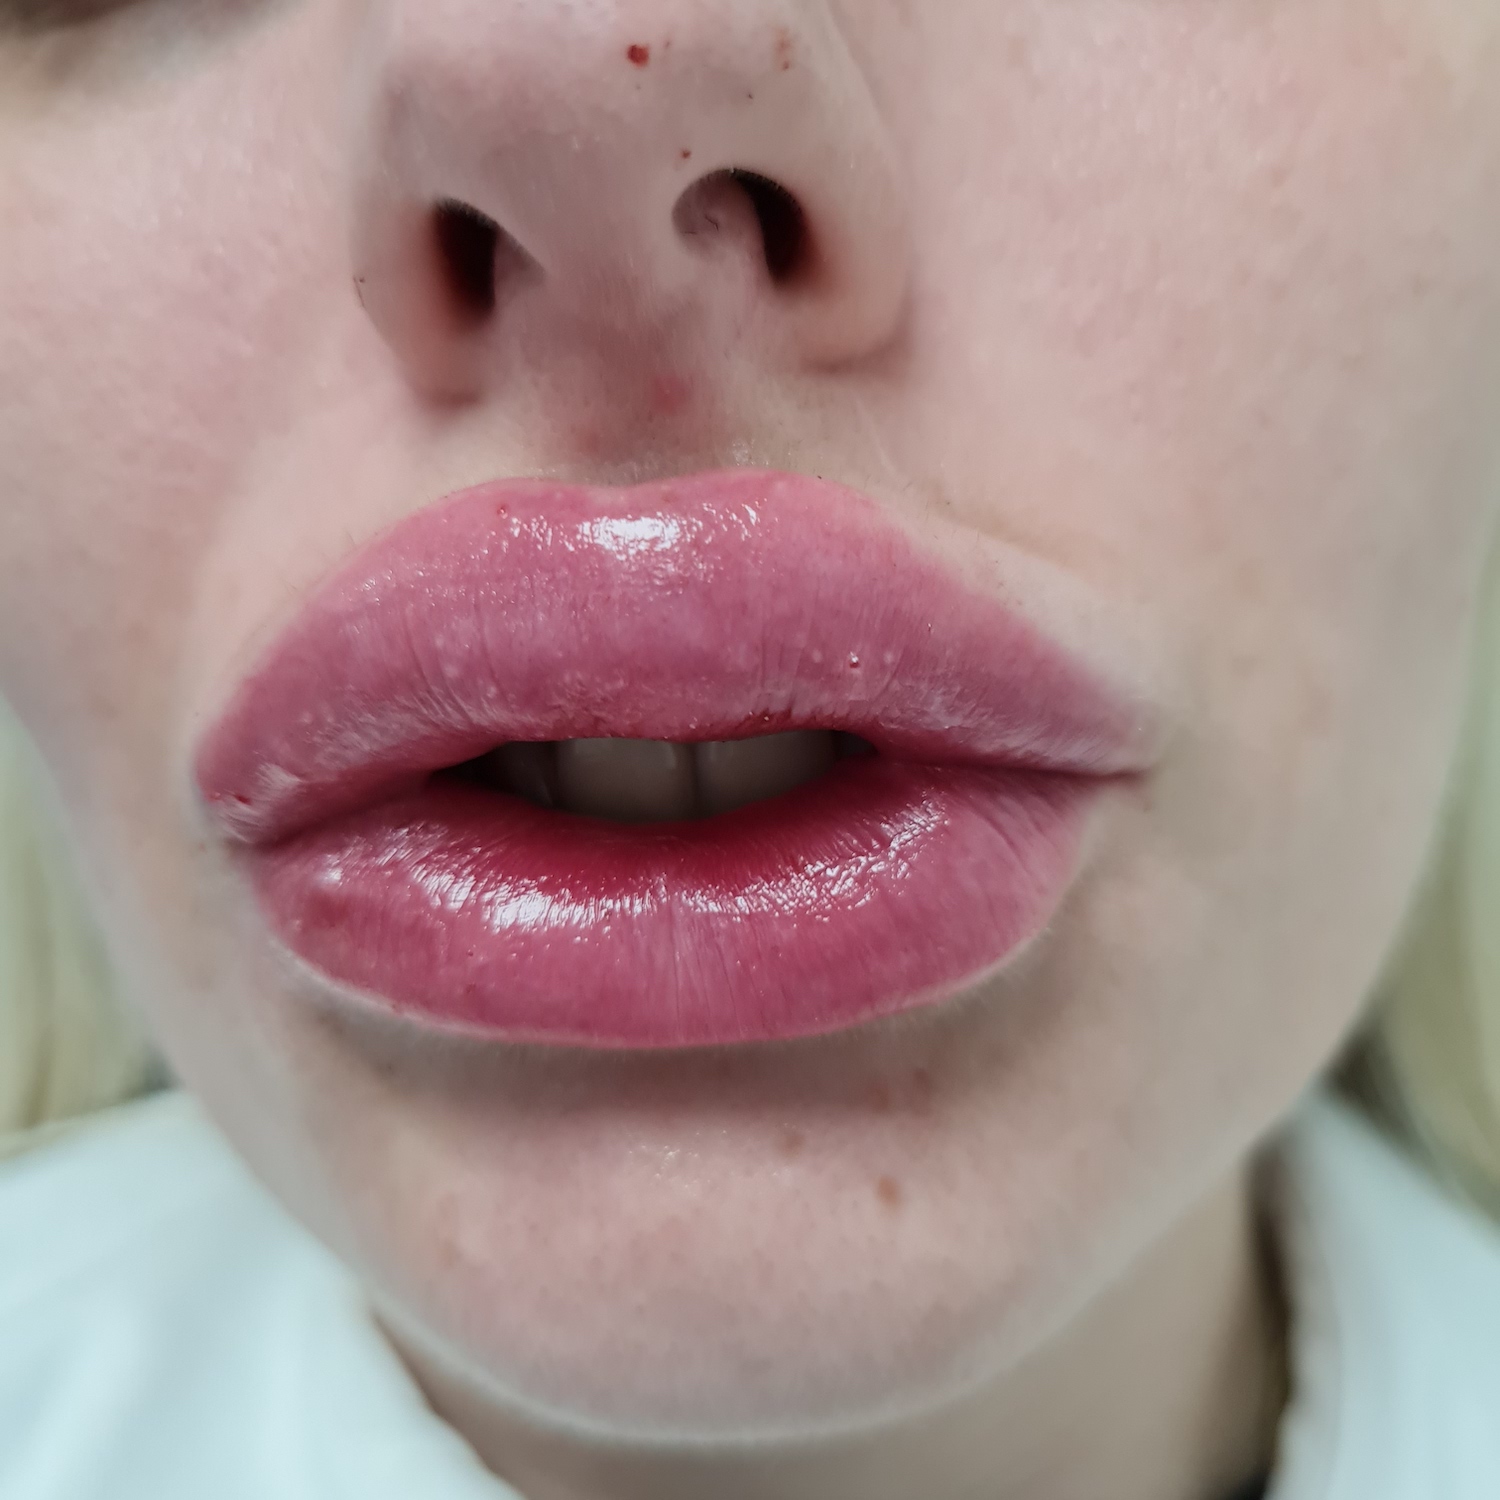 Patient No.1: Lip application